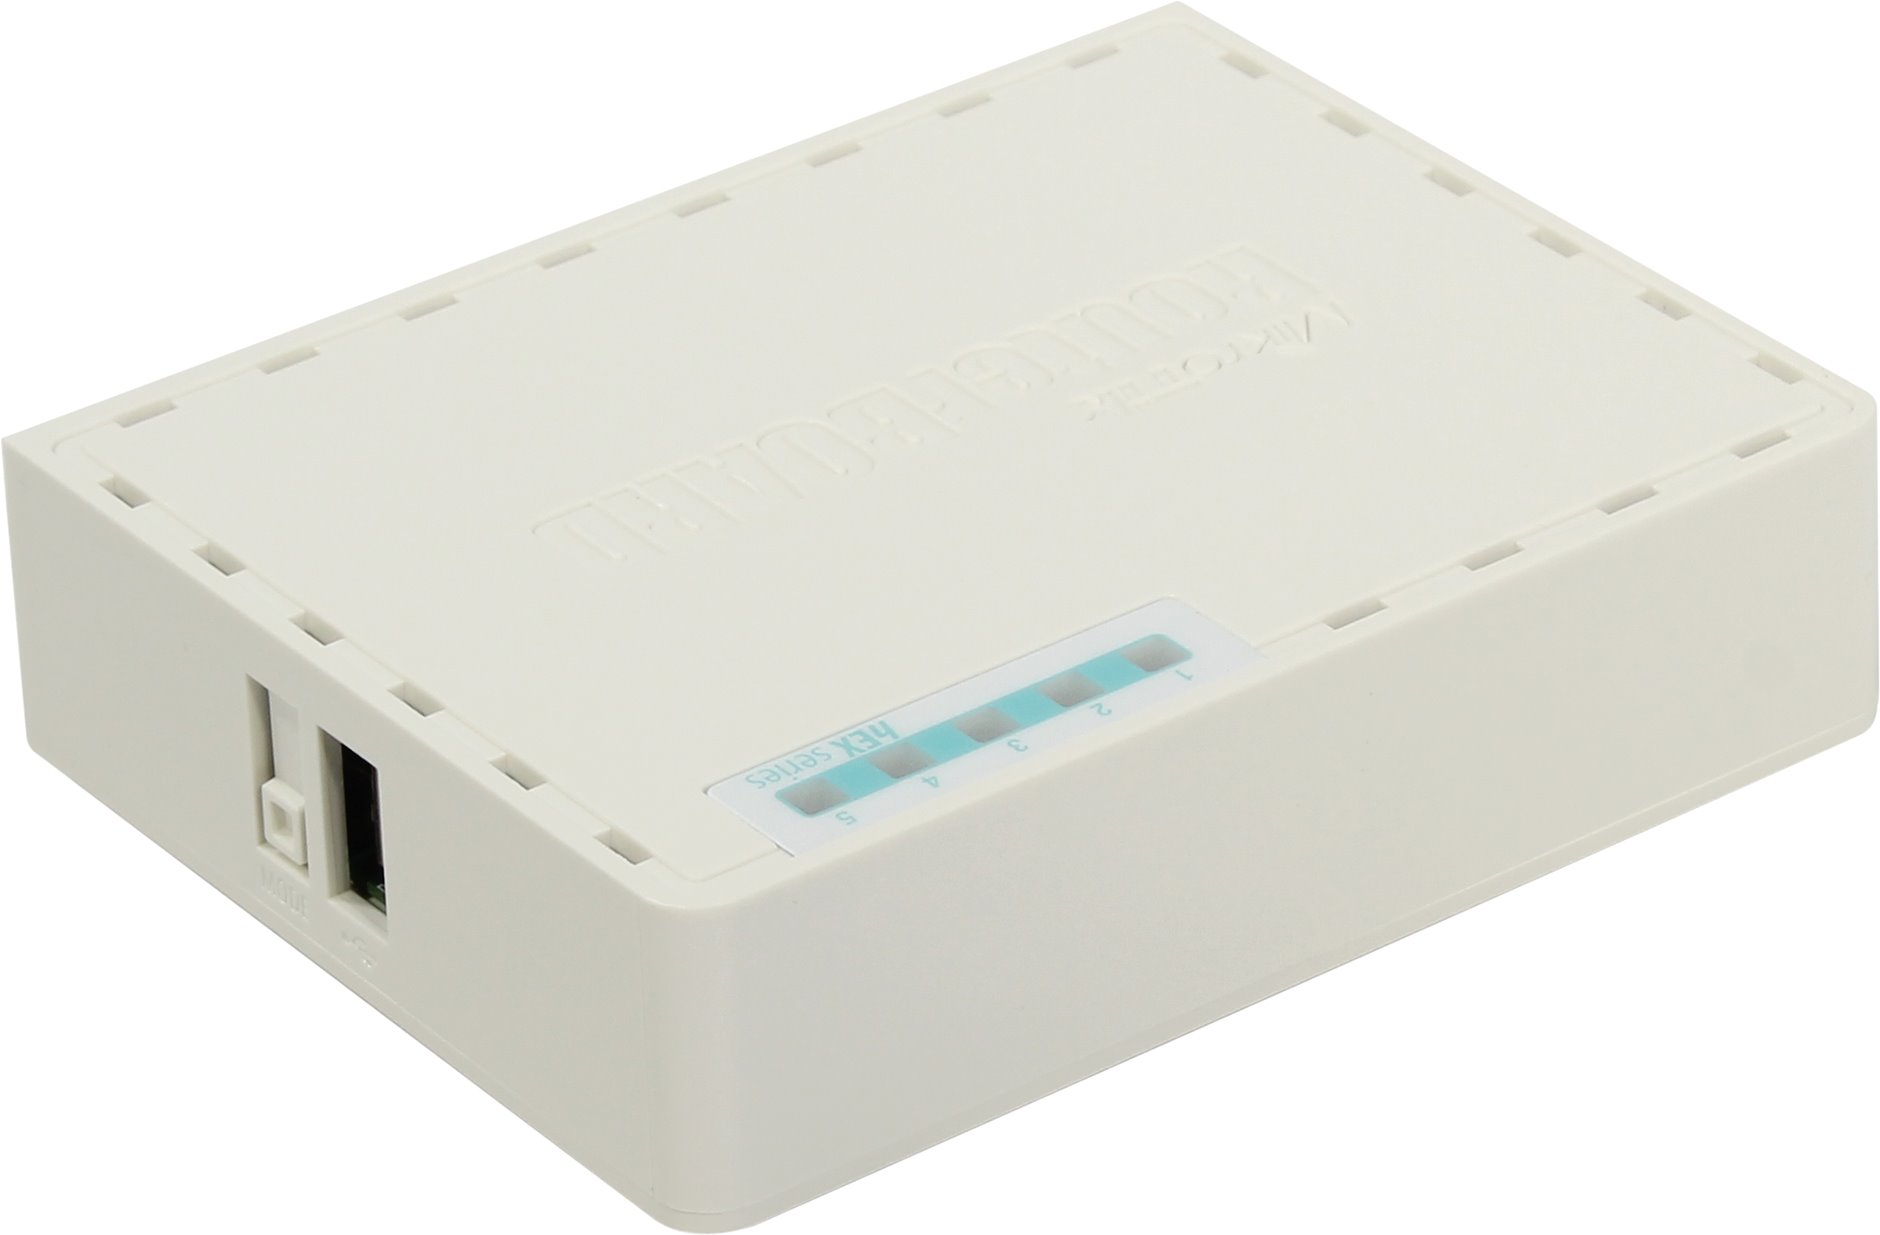 MikroTik RouterBOARD RB750Gr3 — купить, цена и характеристики, отзывы